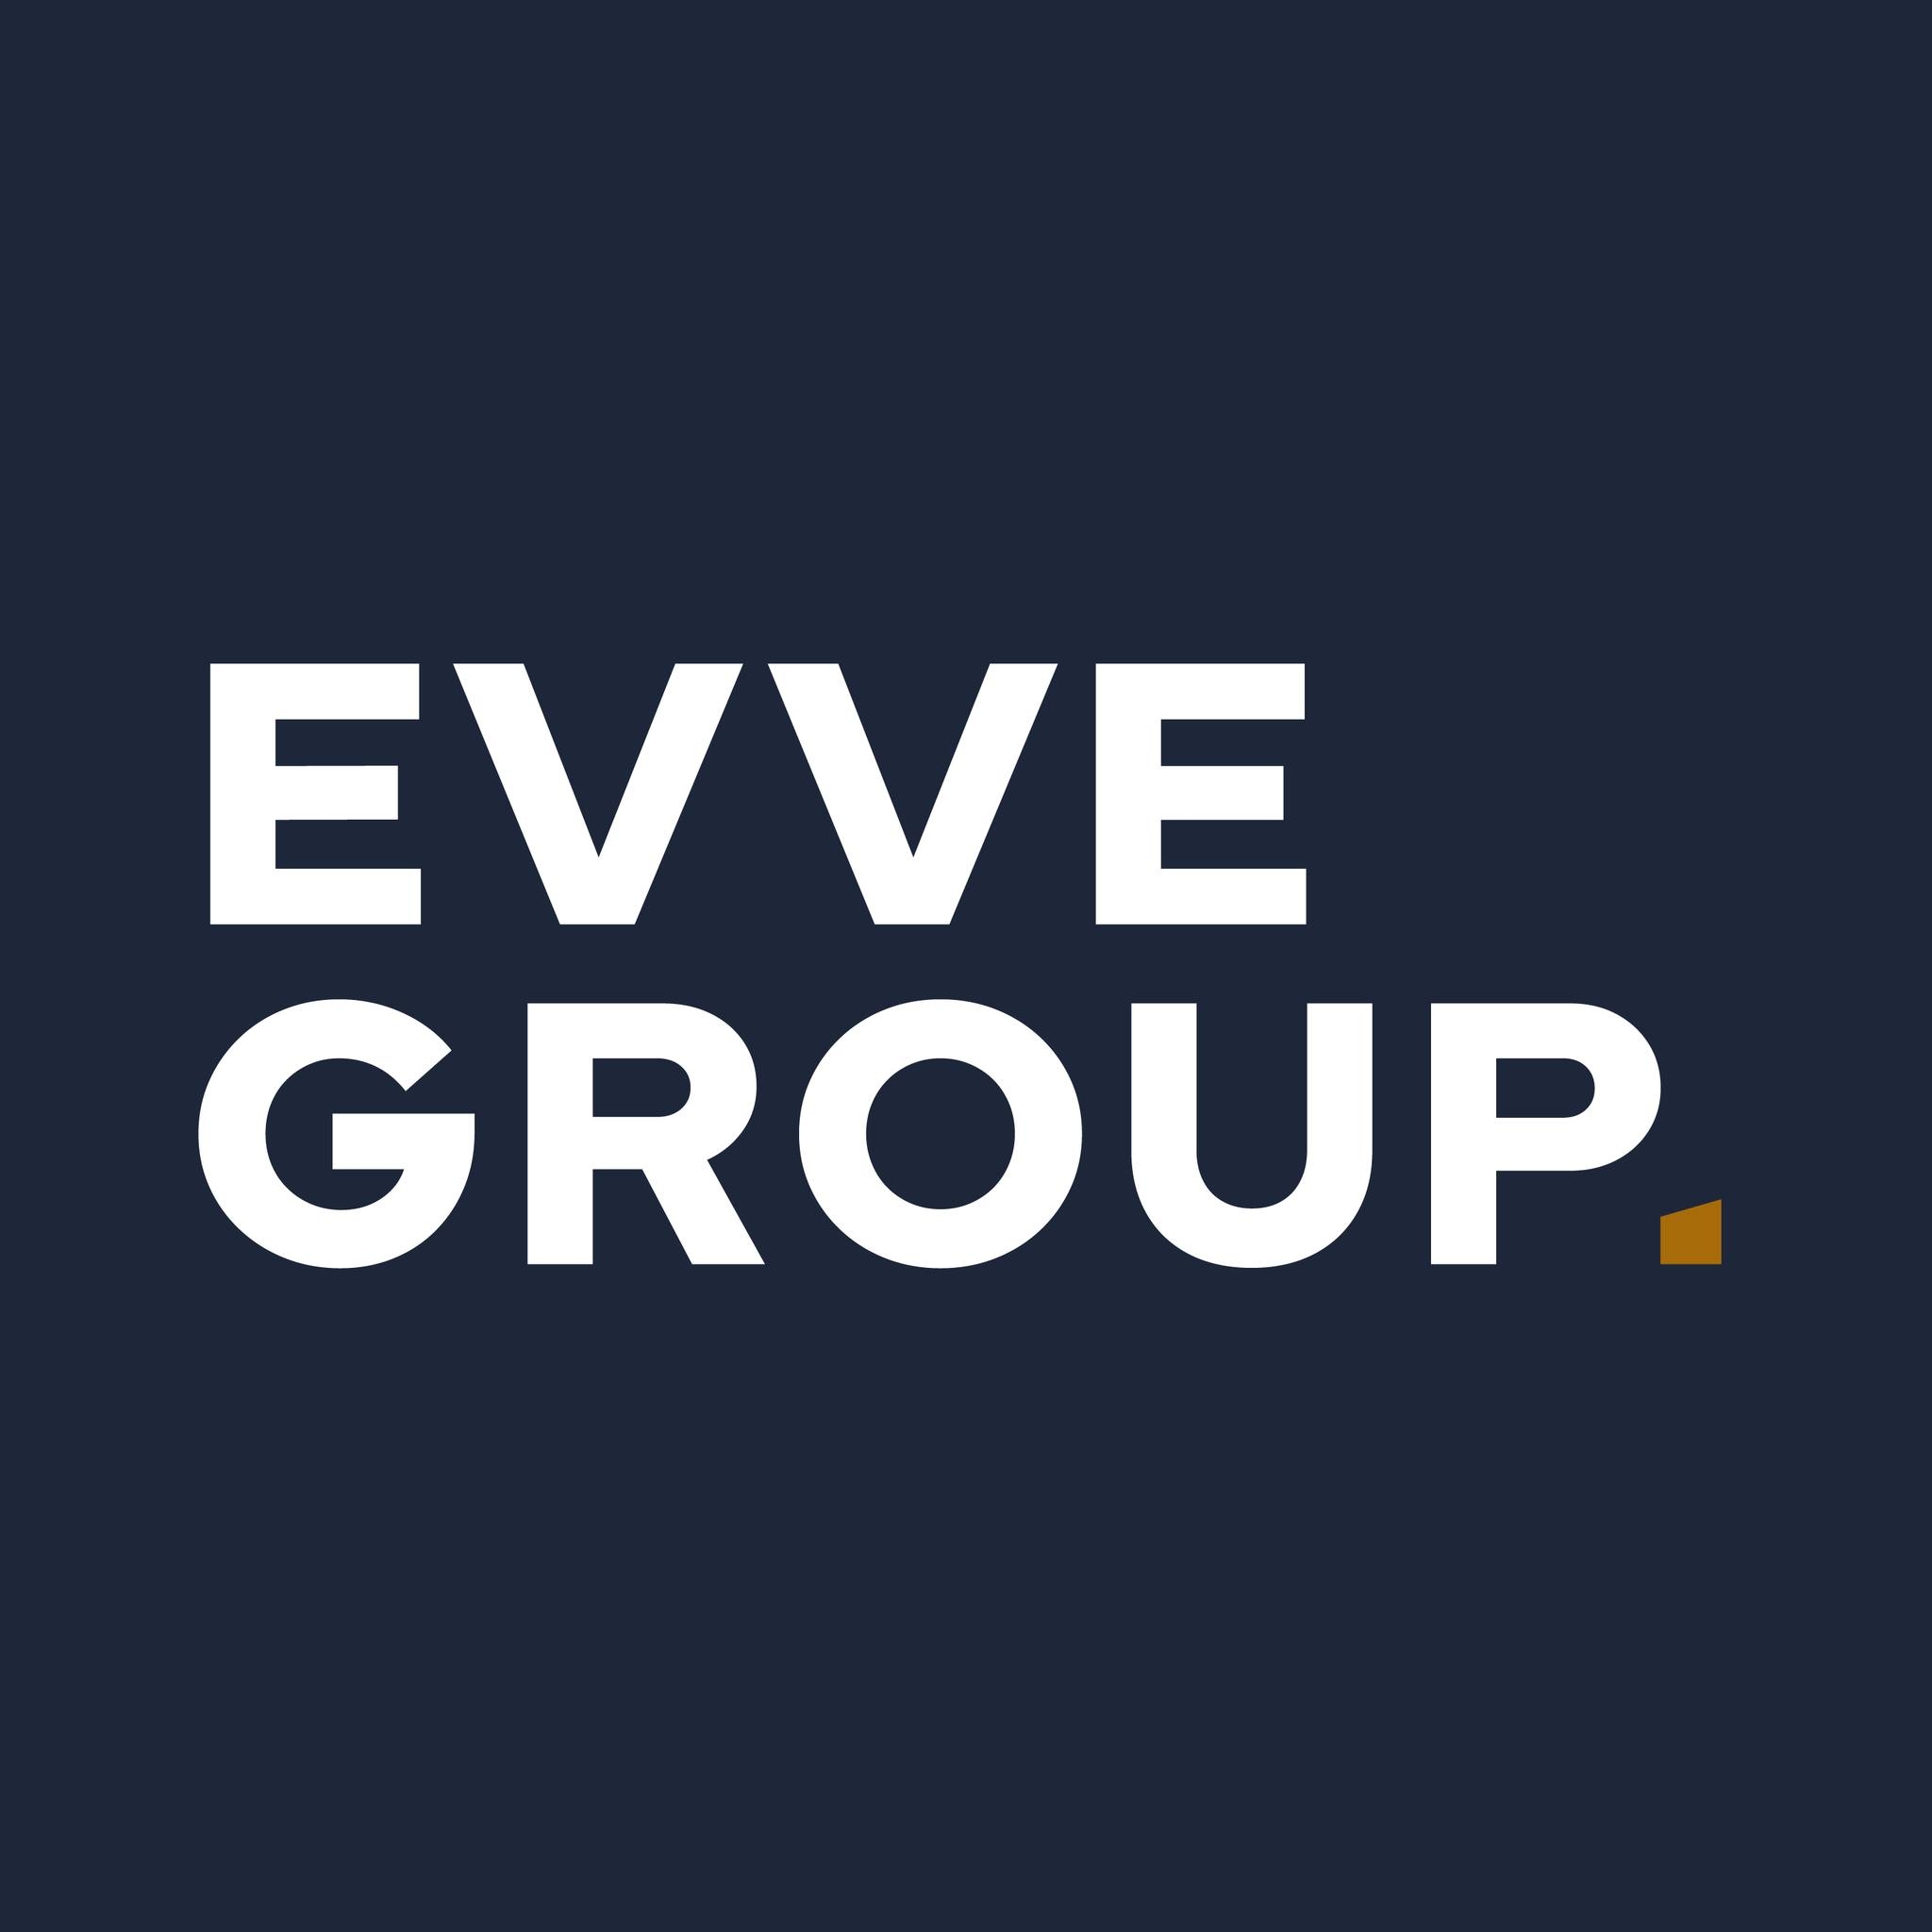 Evve Group